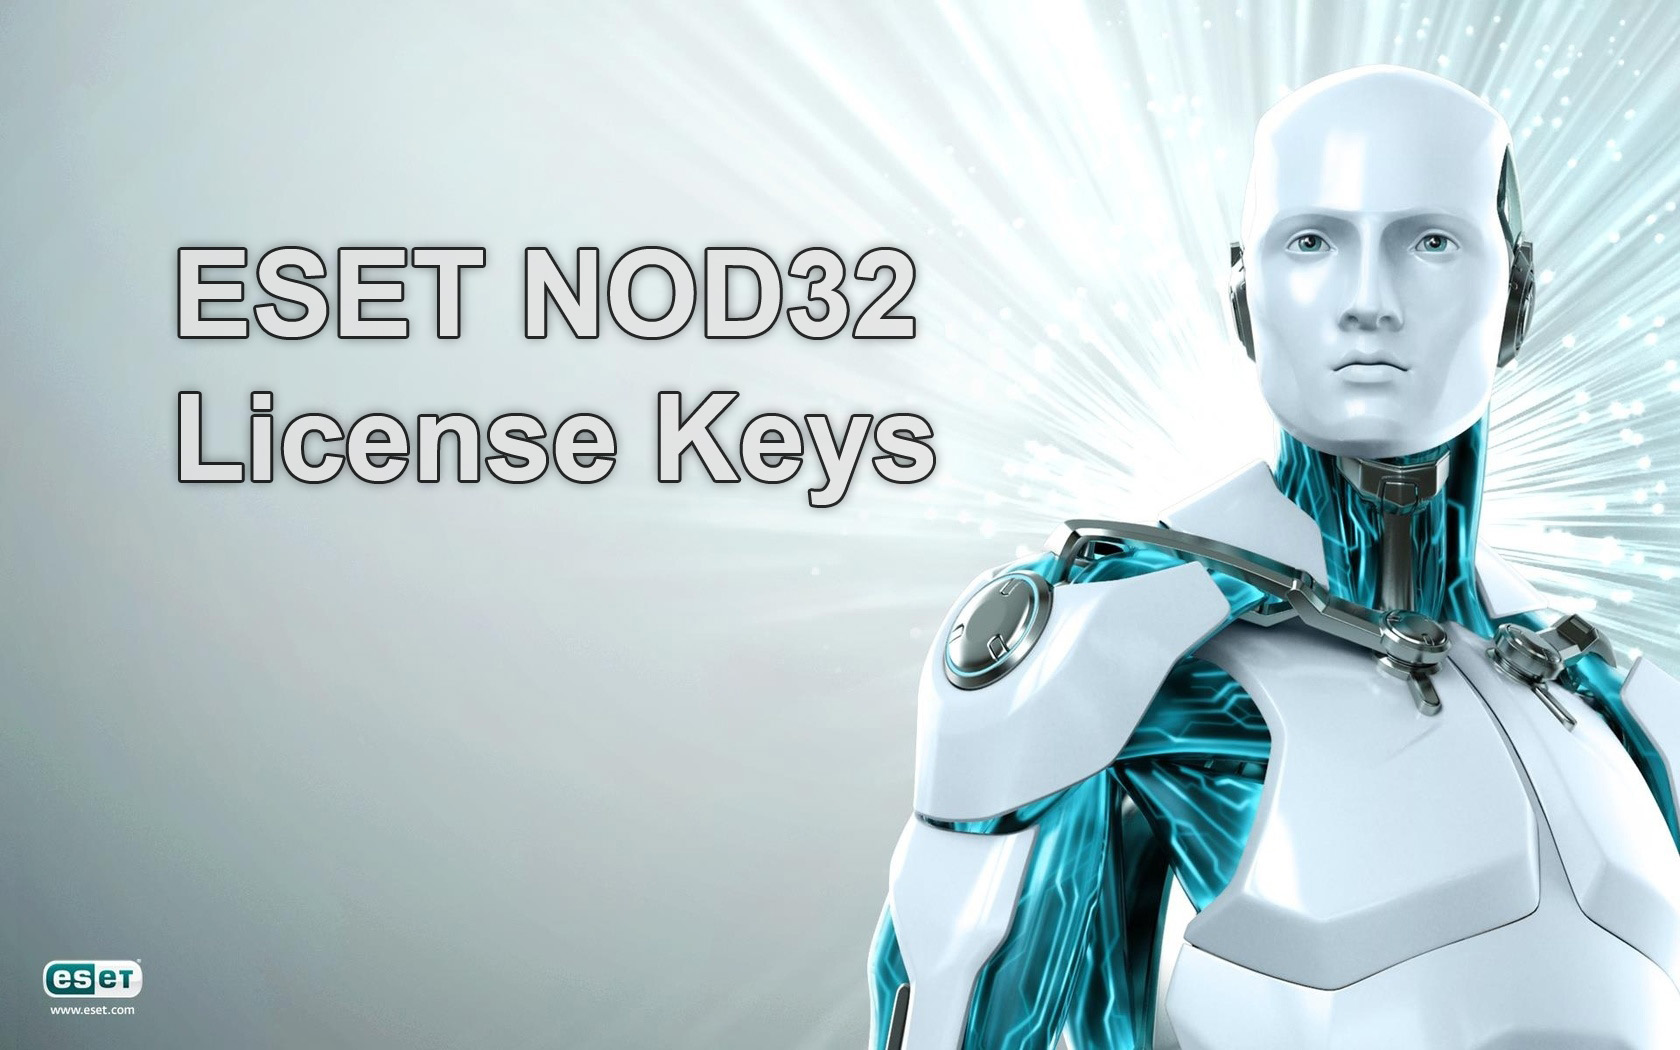 eset nod32 antivirus license key free 2021